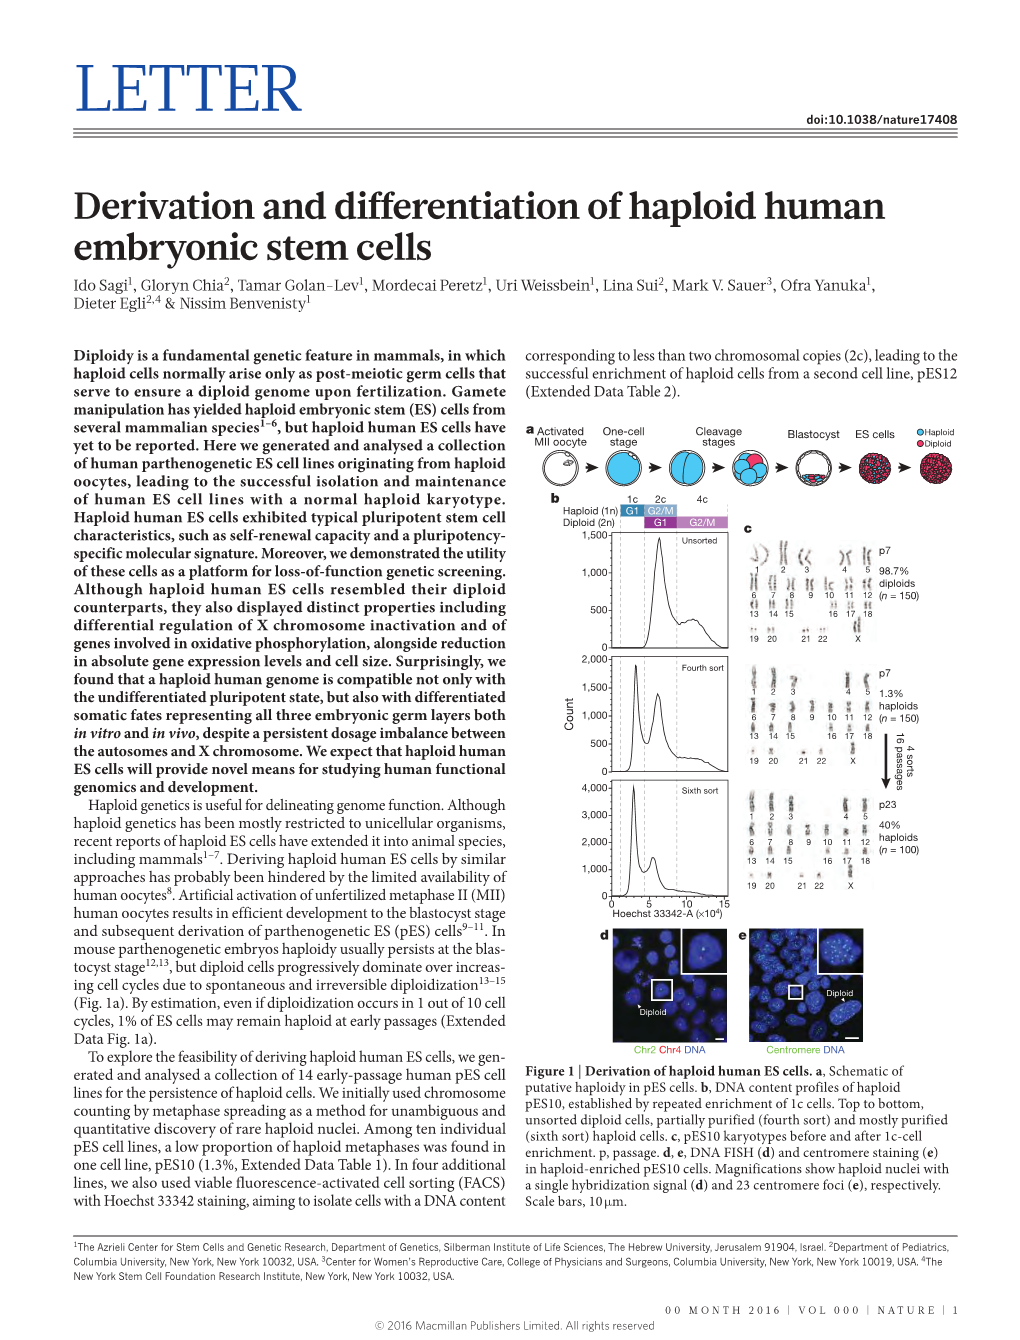 Derivation and Differentiation of Haploid Human Embryonic Stem Cells Ido Sagi1, Gloryn Chia2, Tamar Golan-Lev1, Mordecai Peretz1, Uri Weissbein1, Lina Sui2, Mark V